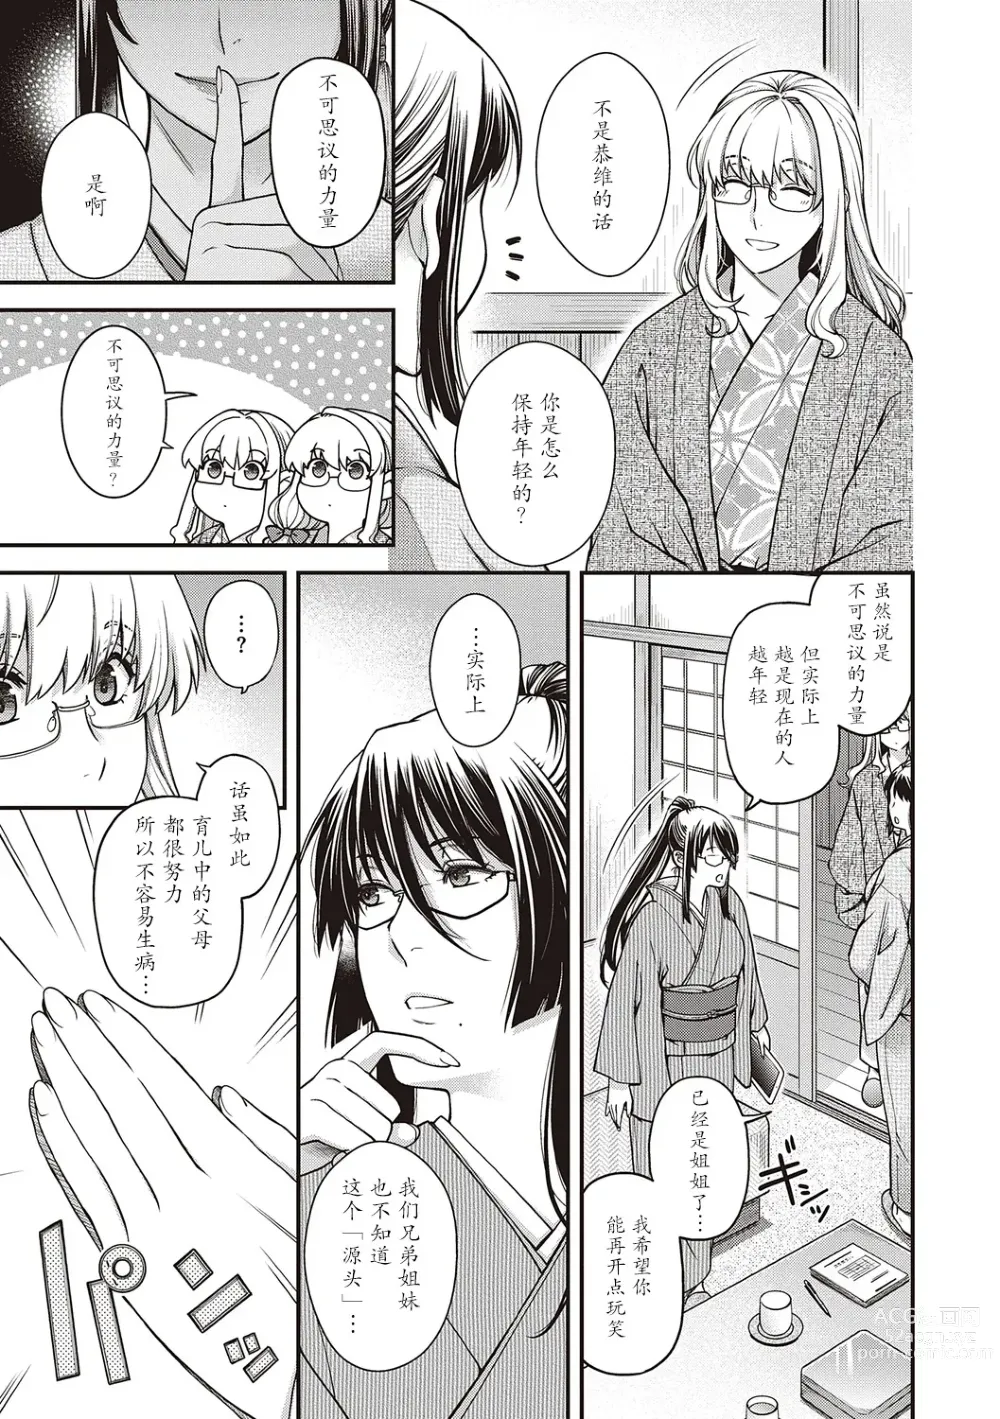 Page 3 of manga 彼誰時家族会議  演目『廻夜のケモノ』